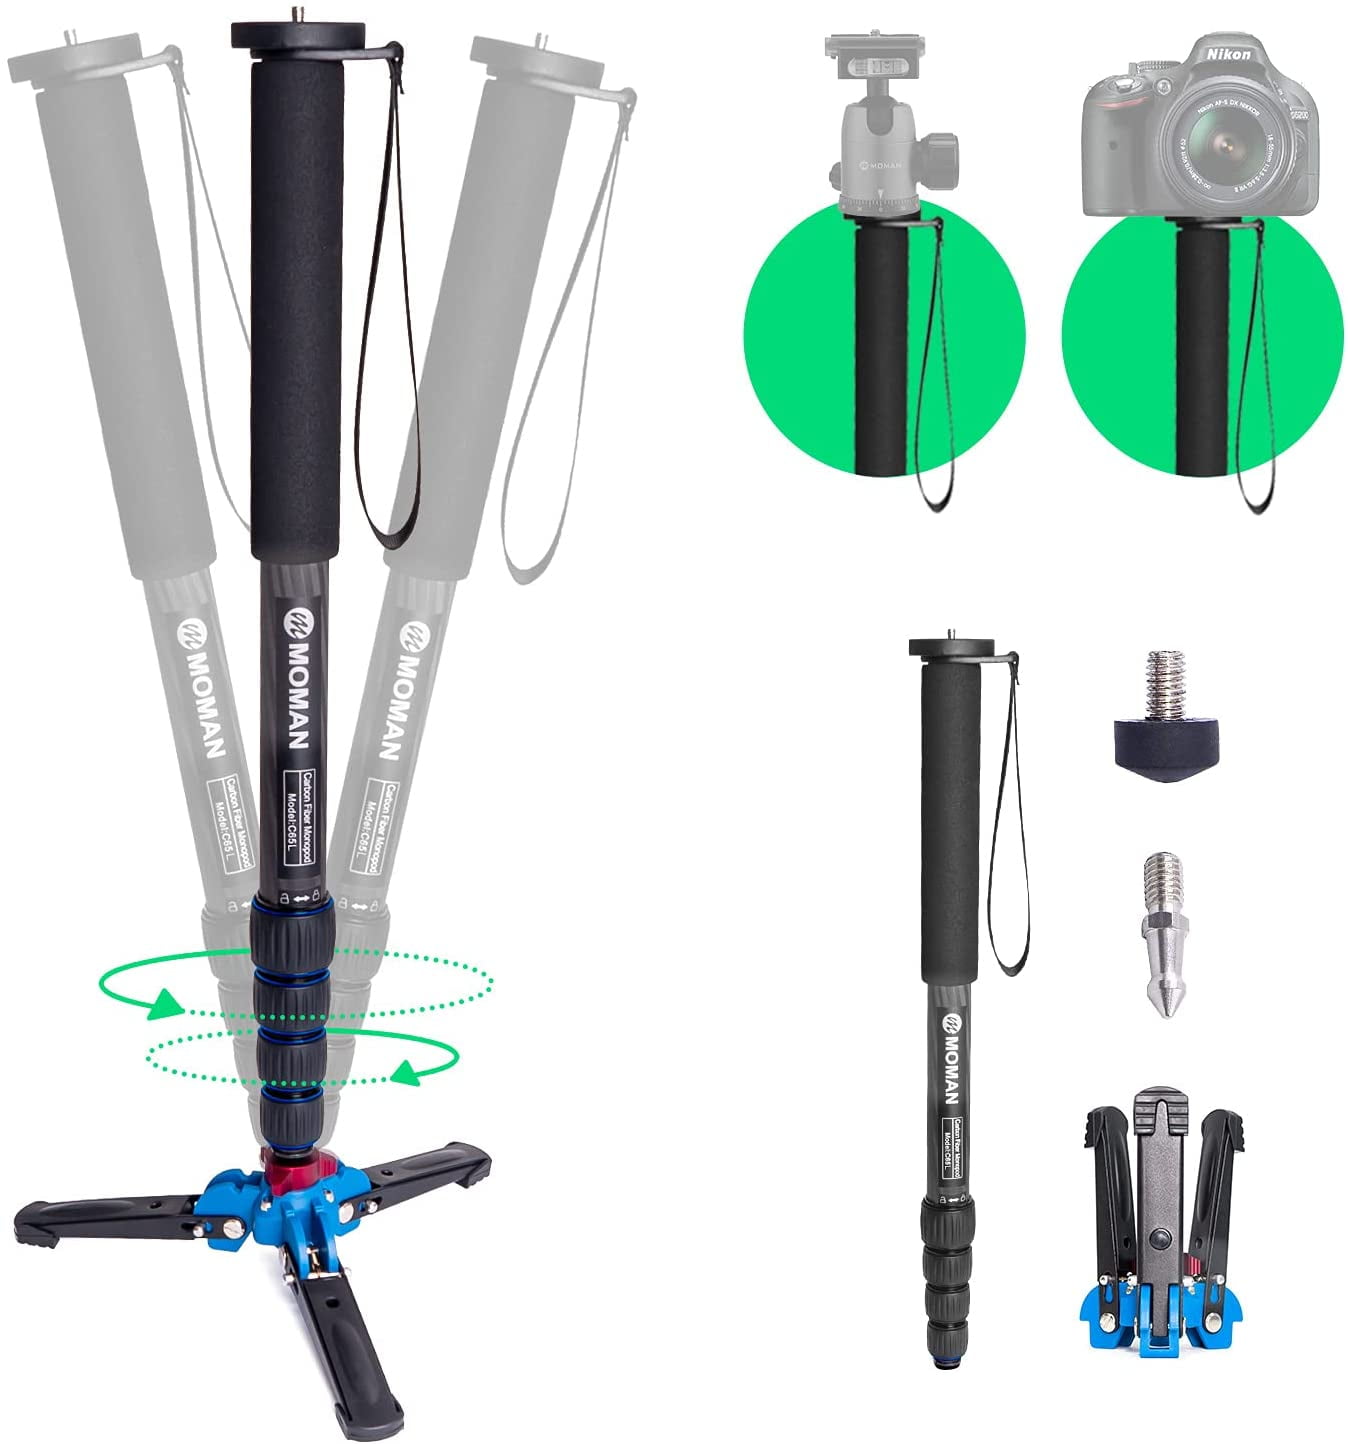 Fluid Base Tripod Legs with Bag.65 3Pod Orbit 4-Section Aluminum Handheld Monopod Stick for DSLR Photo & Video Sports Cameras 